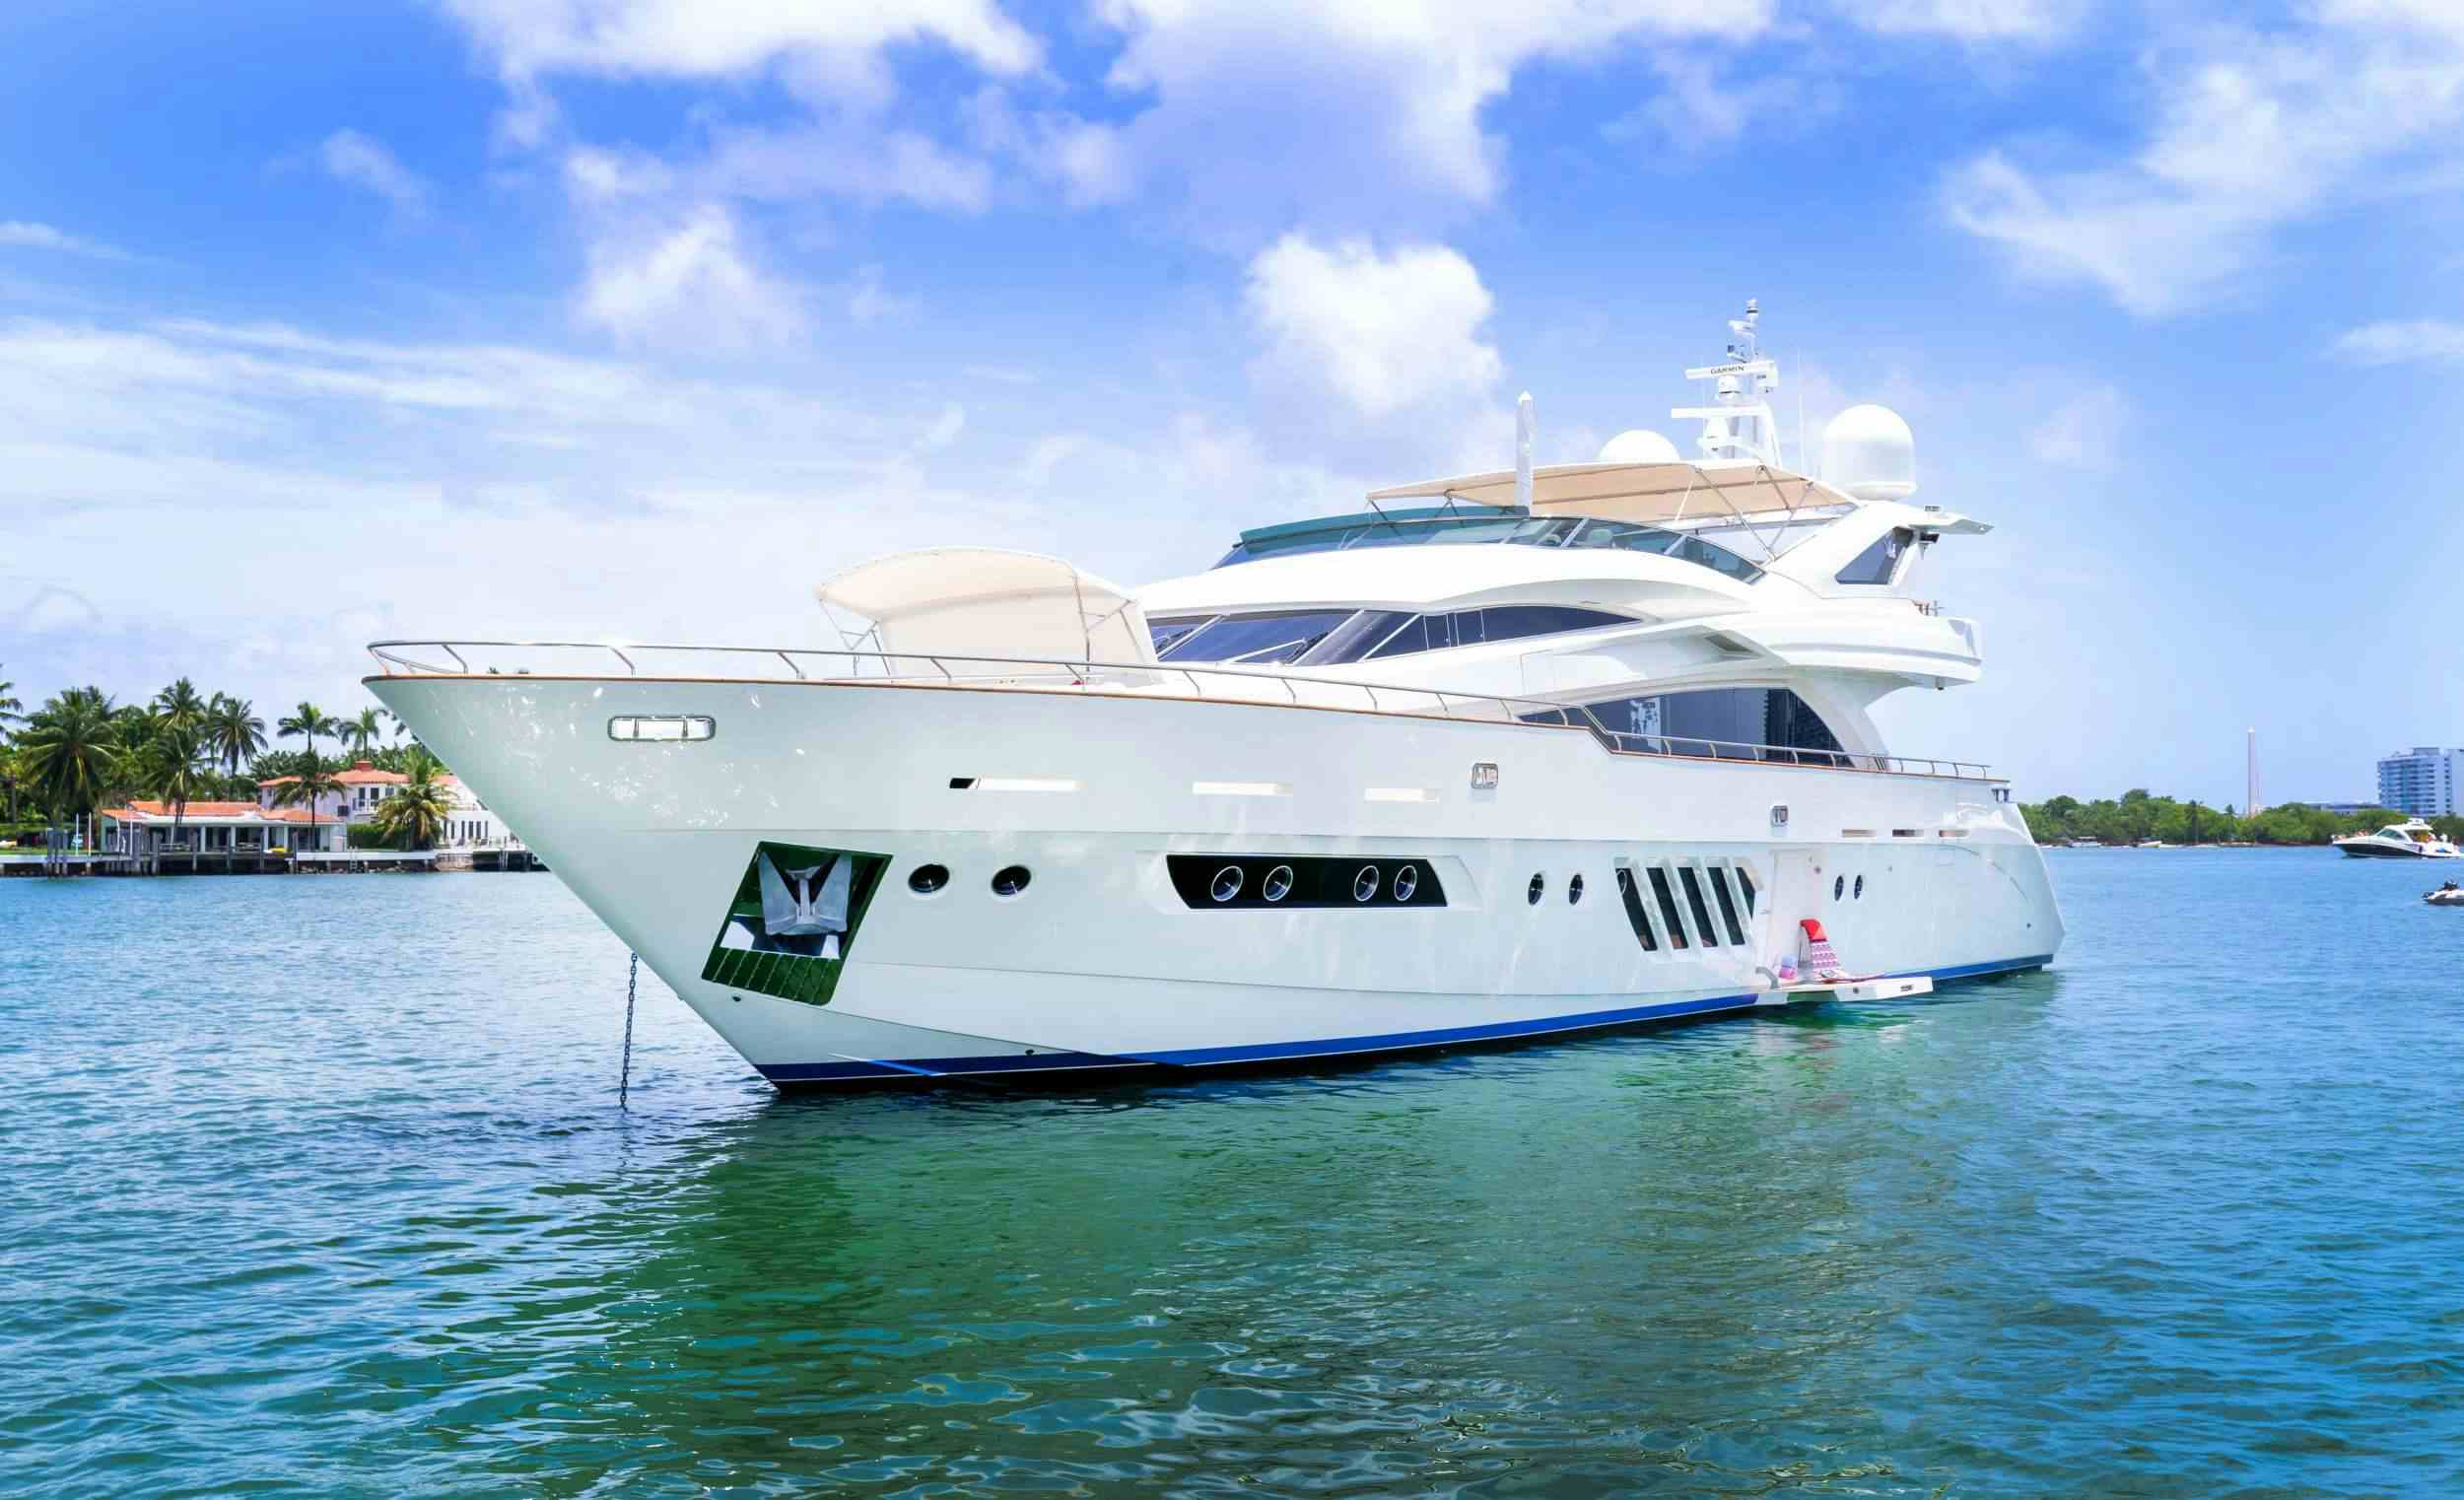 95 DOMINATOR - Yacht Charter Florida & Boat hire in US East Coast & Bahamas 1